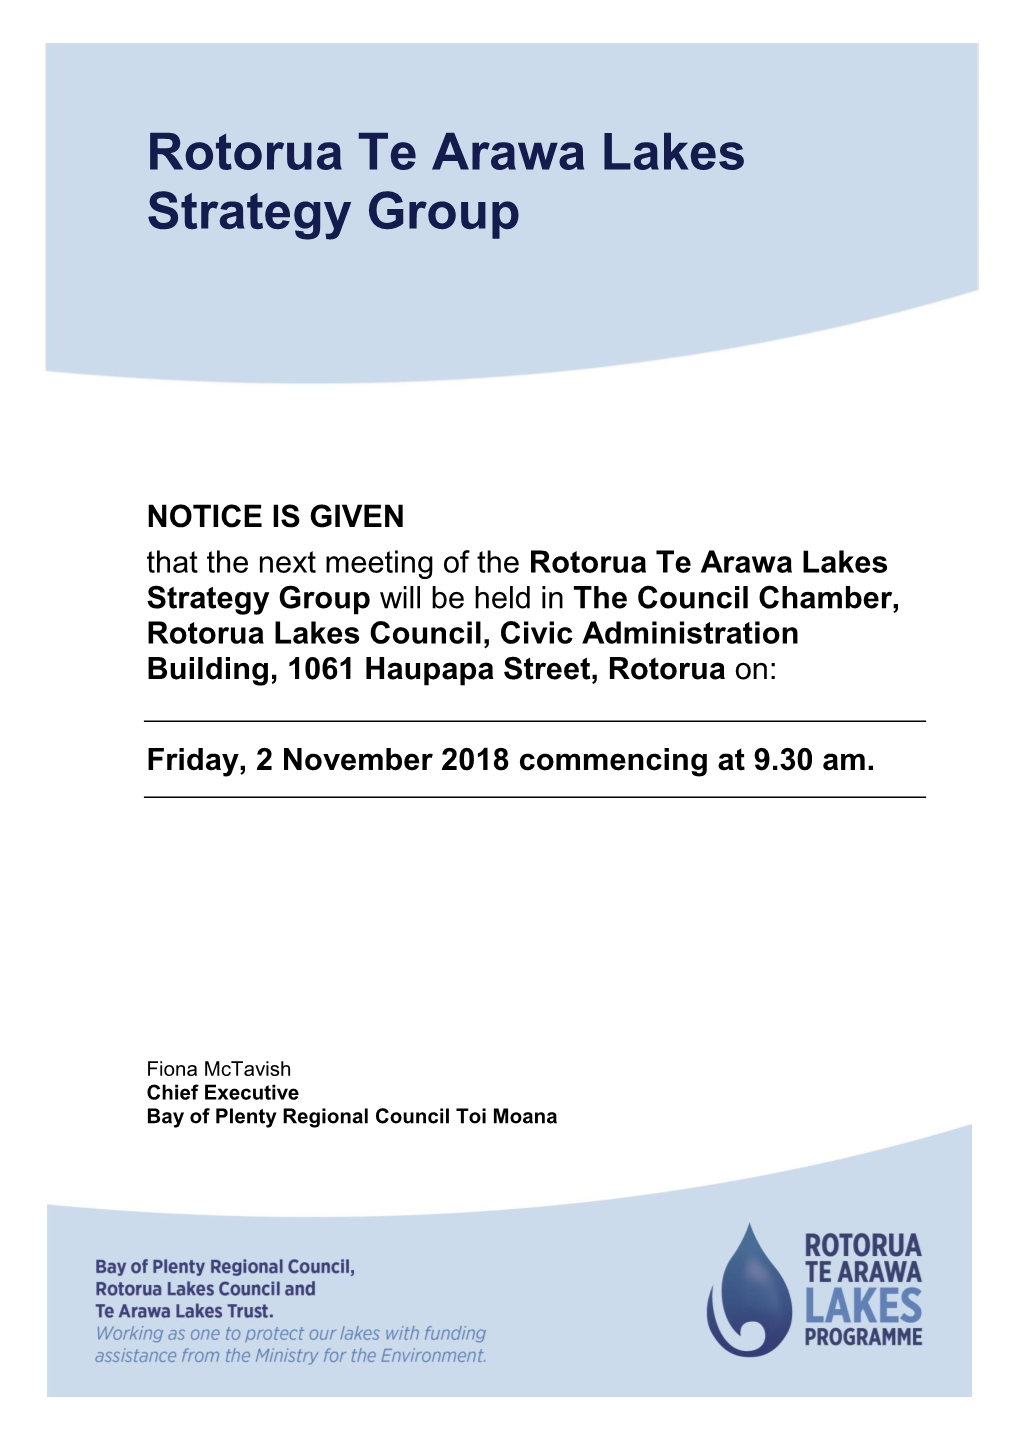 Rotorua Te Arawa Lakes Strategy Group Will Be Held in the Council Chamber, Rotorua Lakes Council, Civic Administration Building, 1061 Haupapa Street, Rotorua On